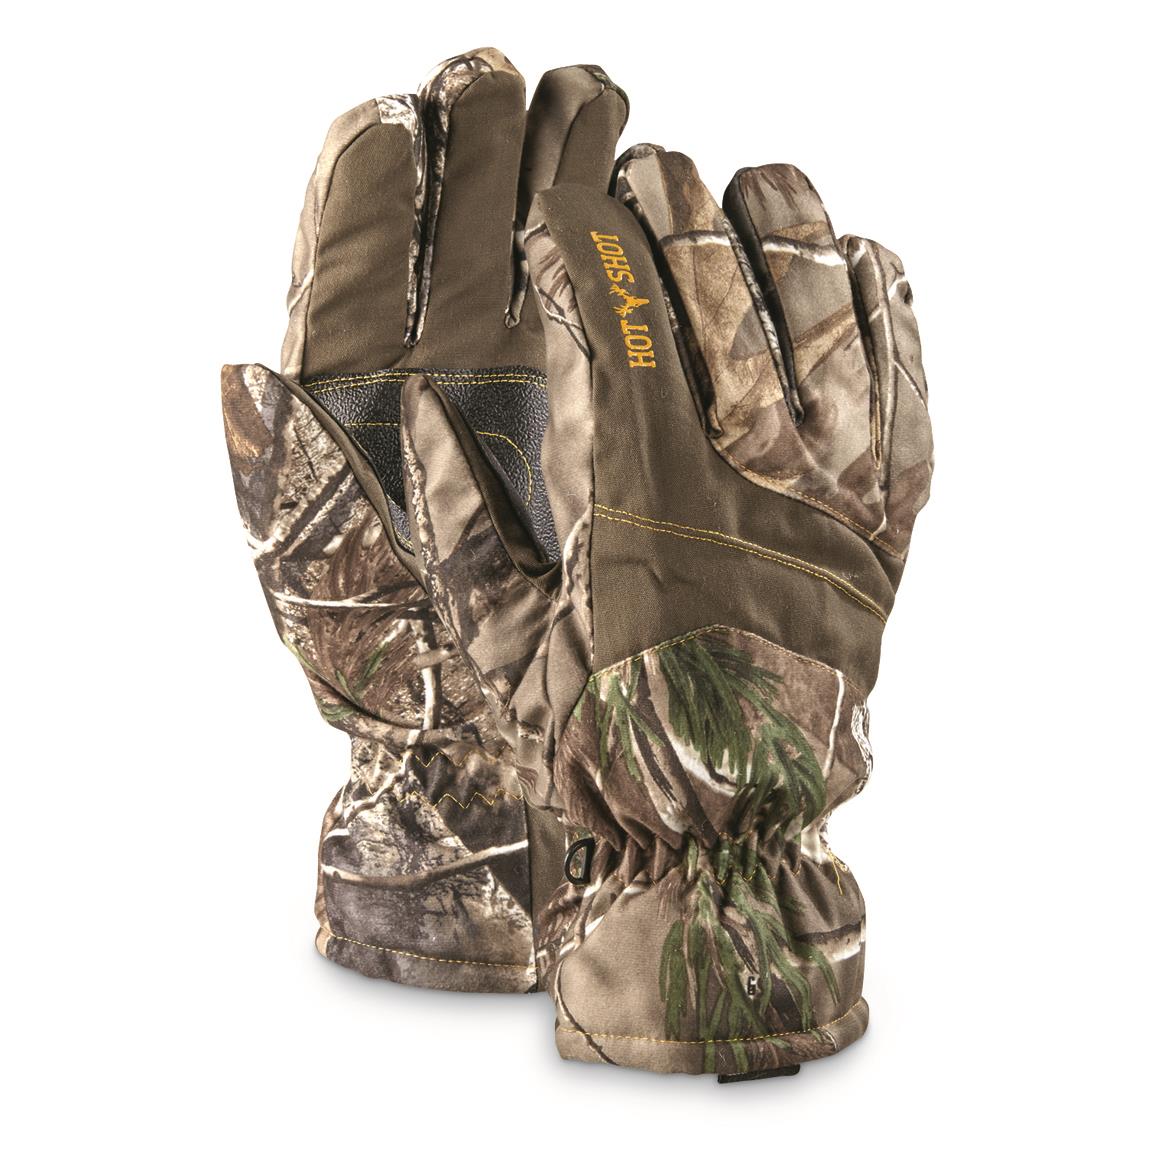 Hot Shot Men's Camo Hunting Gloves, Waterproof, 2 Pack - 641131, Gloves ...